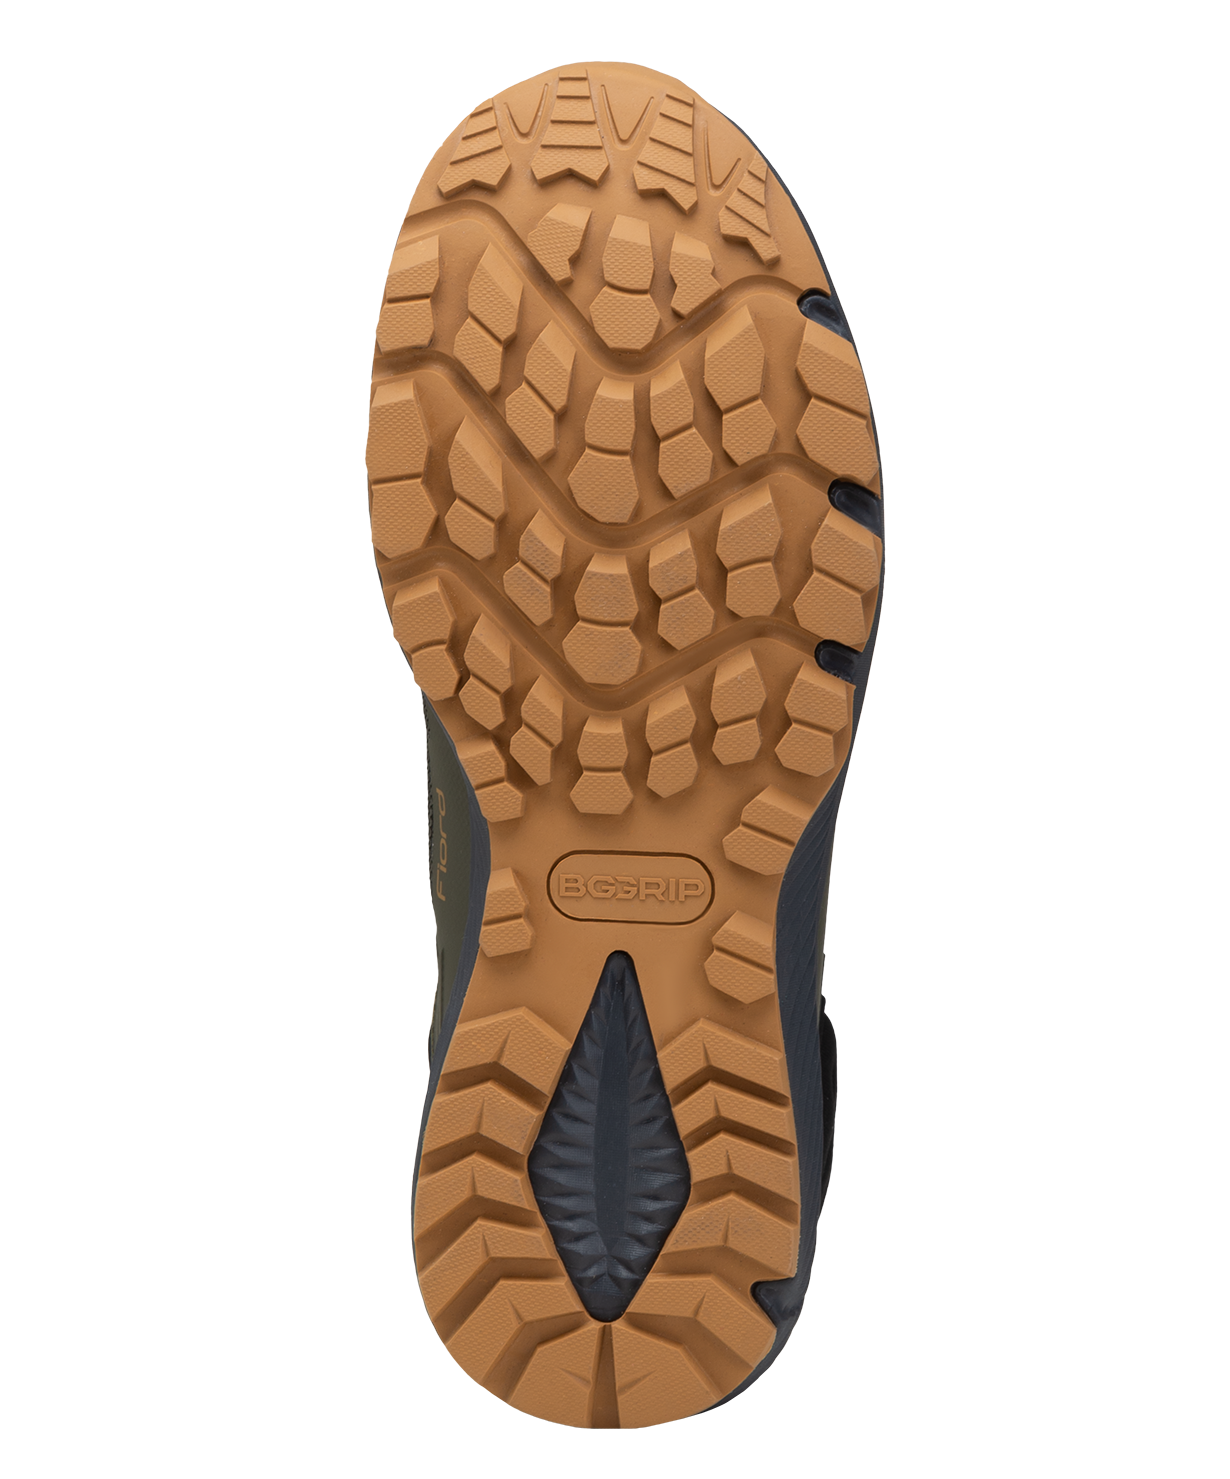 Ботинки Berger Fiord Waterproof, хаки/черный, мужской, р. 39-45 размер 43